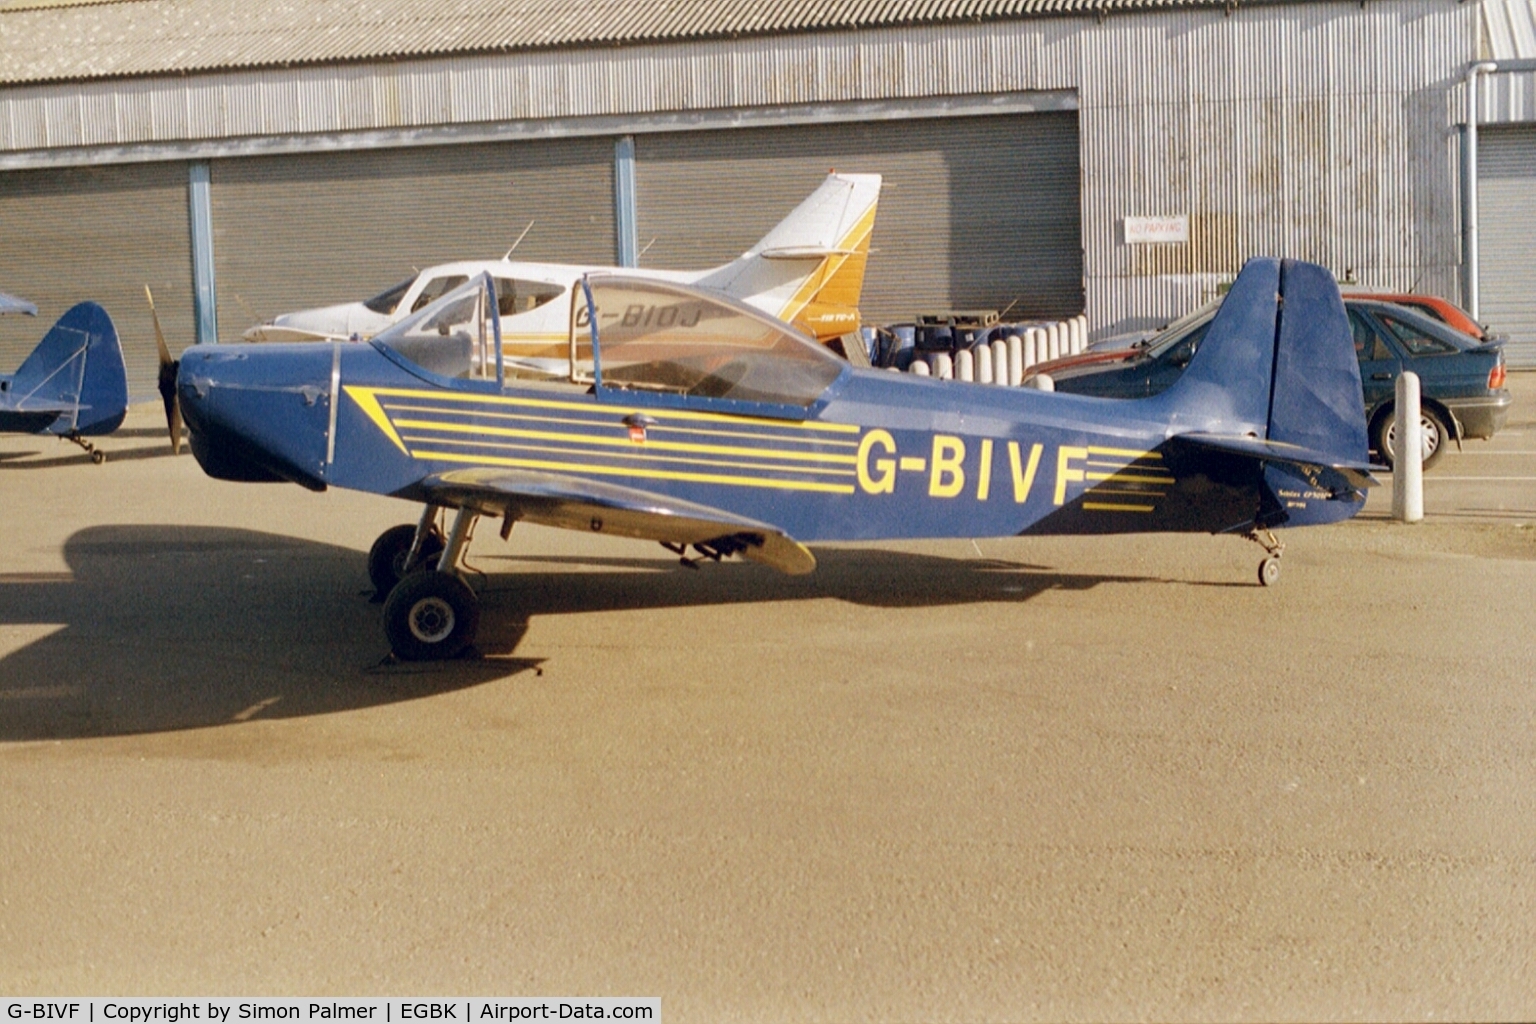 G-BIVF, 1962 Scintex CP-301-C3 Emeraude C/N 594, Emeraude at Northampton